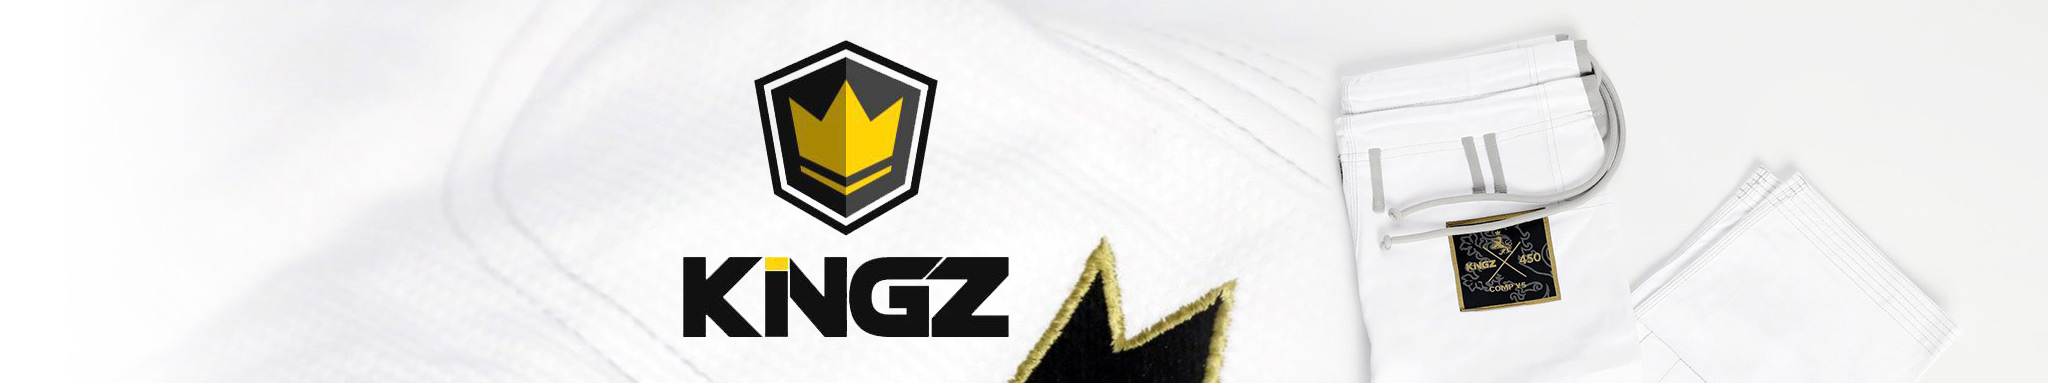 Kingz : équipements & vêtements de la marque Kingz | Dragon Bleu